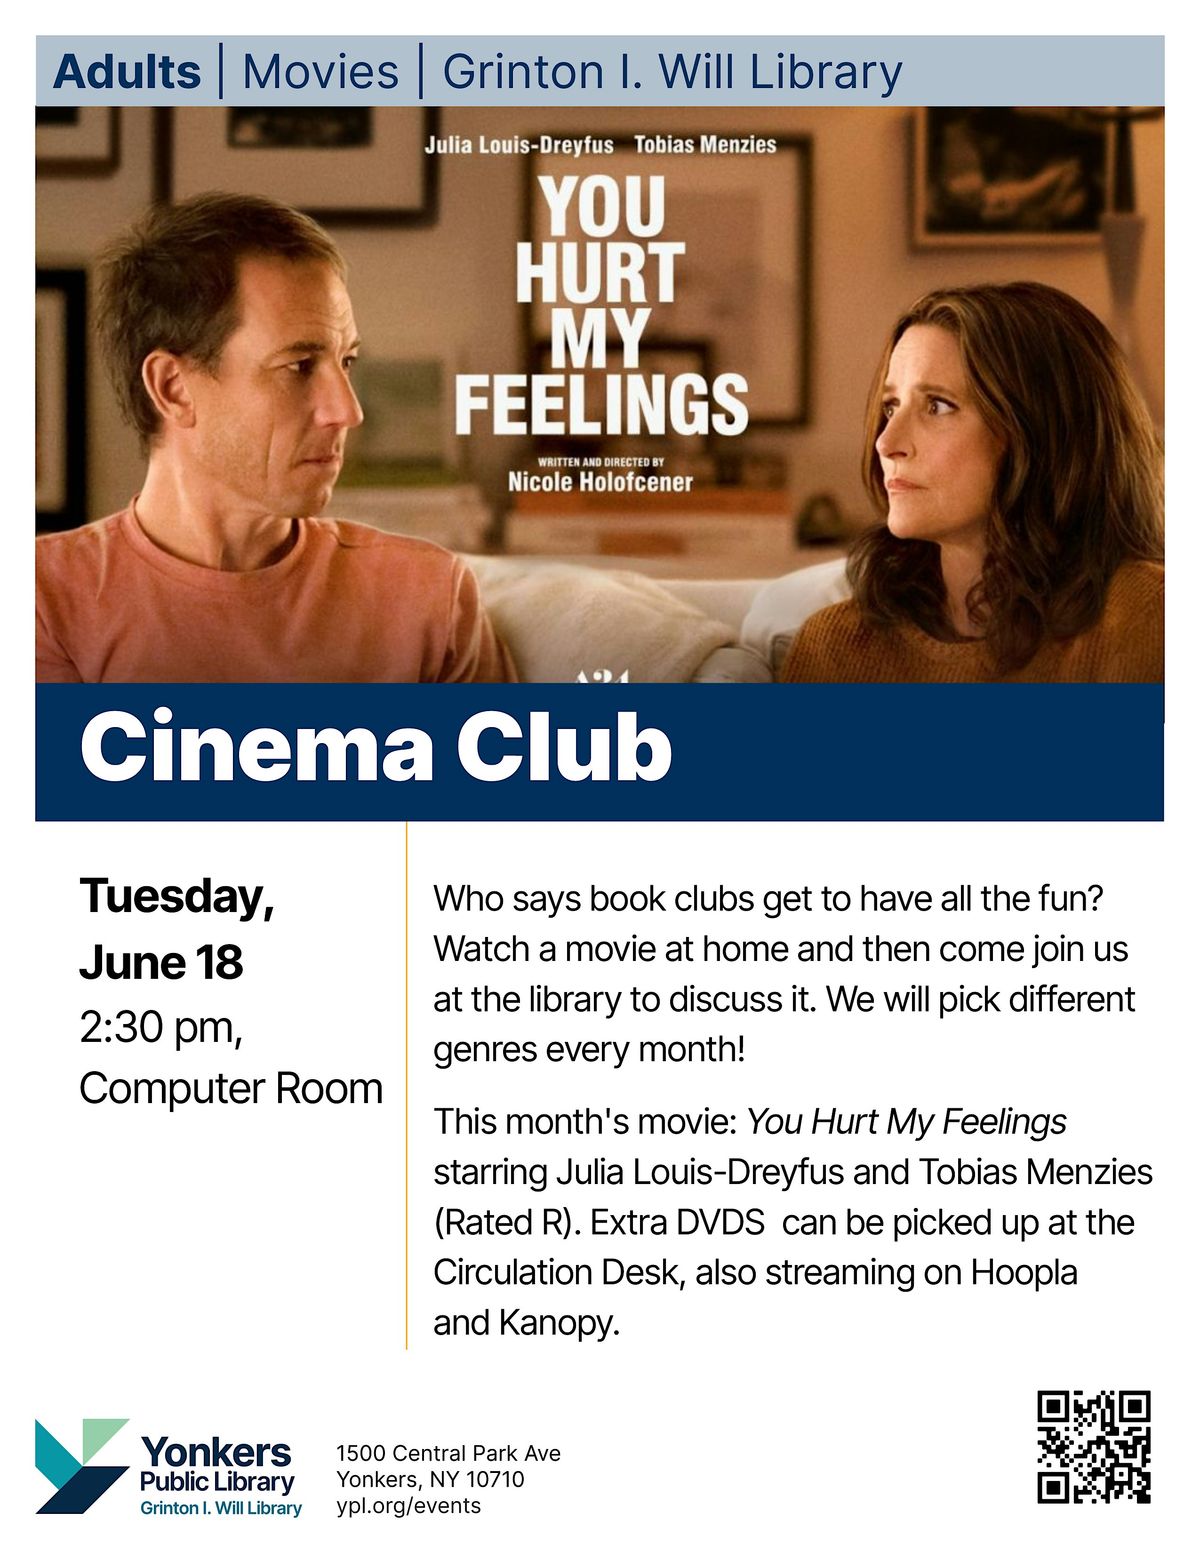 Cinema Club: You Hurt My Feelings